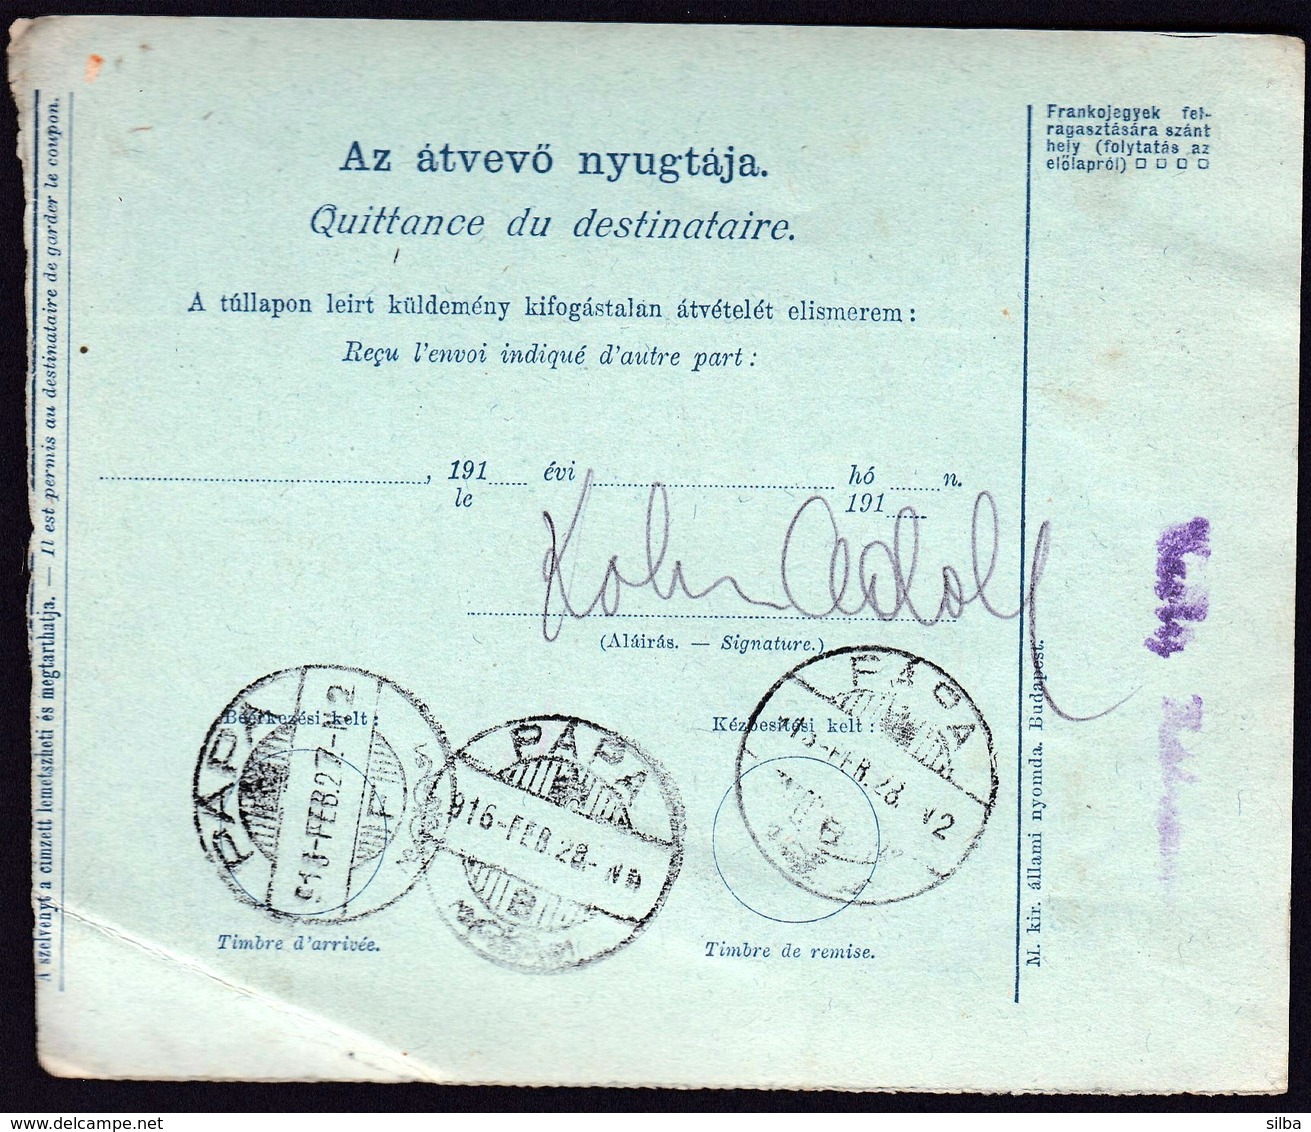 Hungary Tiszafured 1916 / Parcel Post, Postai Szallitolevel, Bulletin D' Expedition / To Papa - Paketmarken